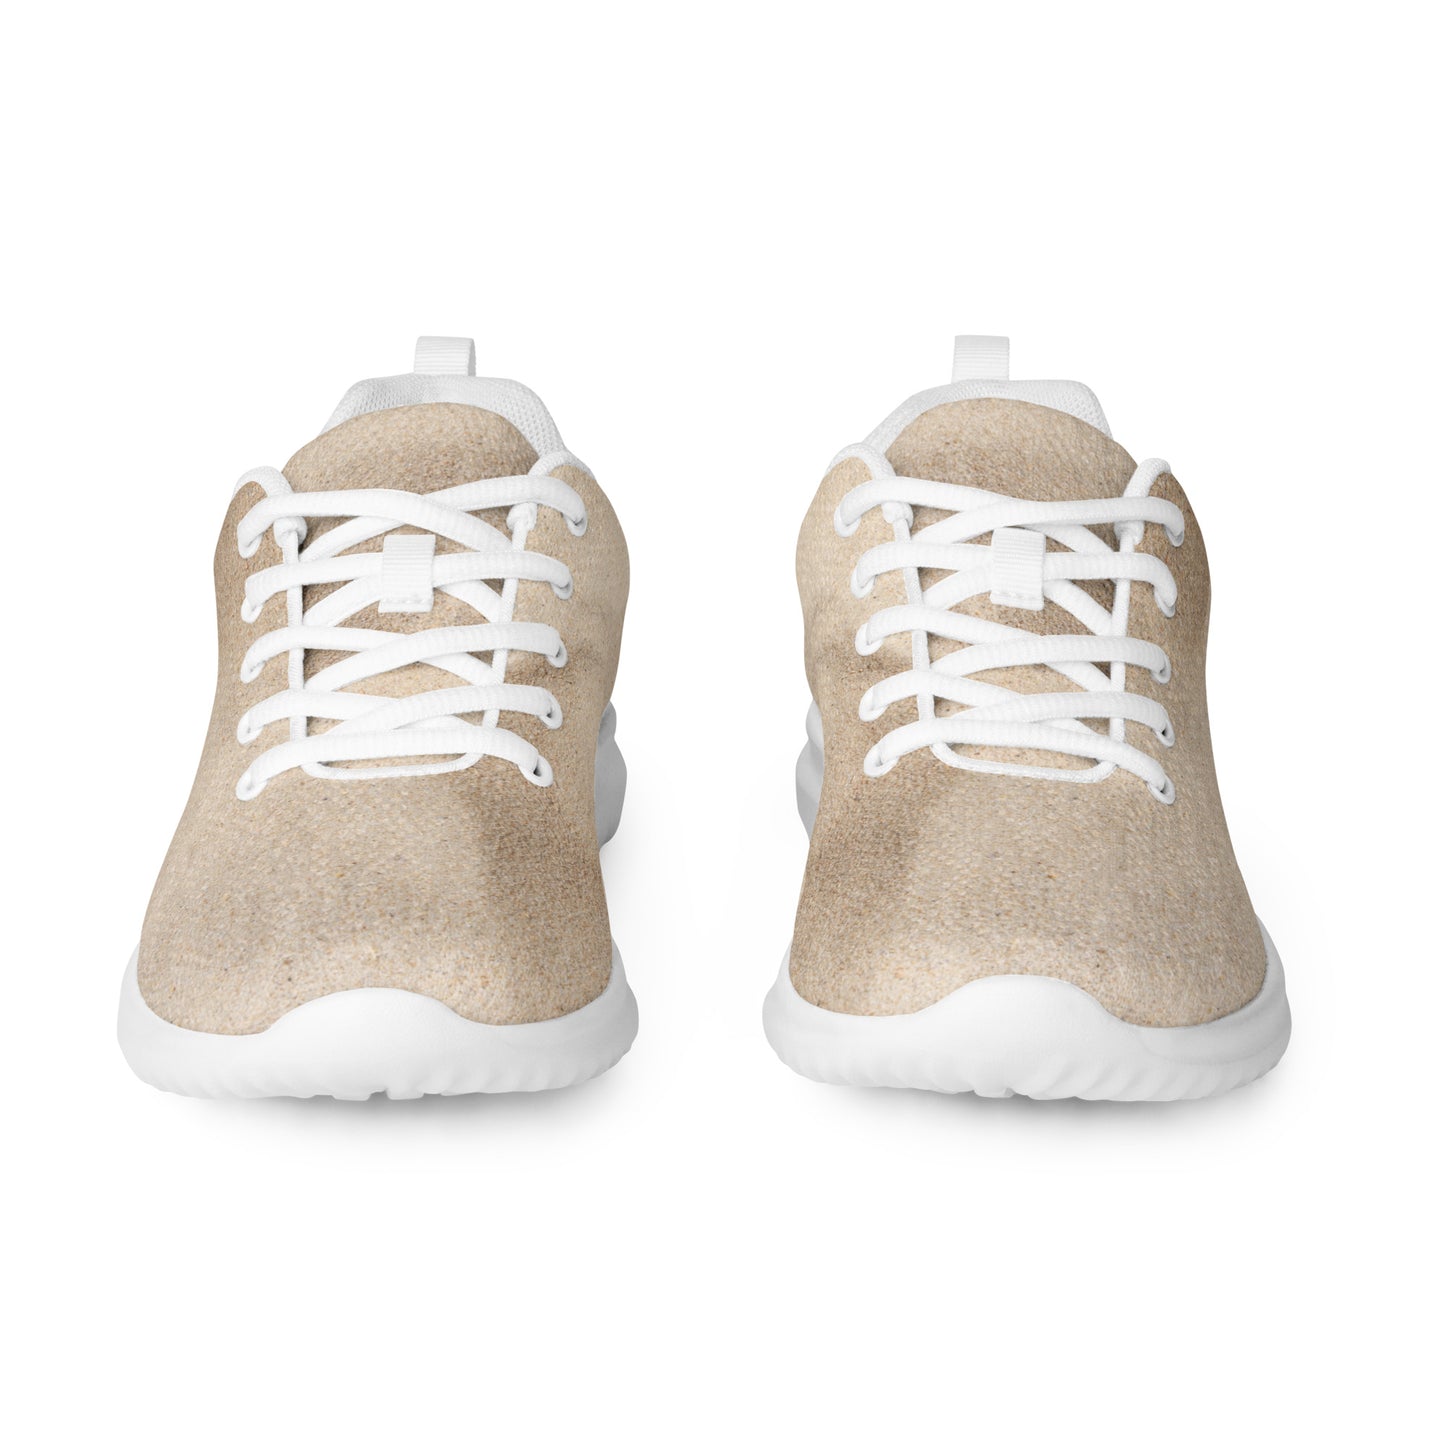 DASH Natural Sand Men’s Athletic Shoes Lightweight Breathable Design by IOBI Original Apparel